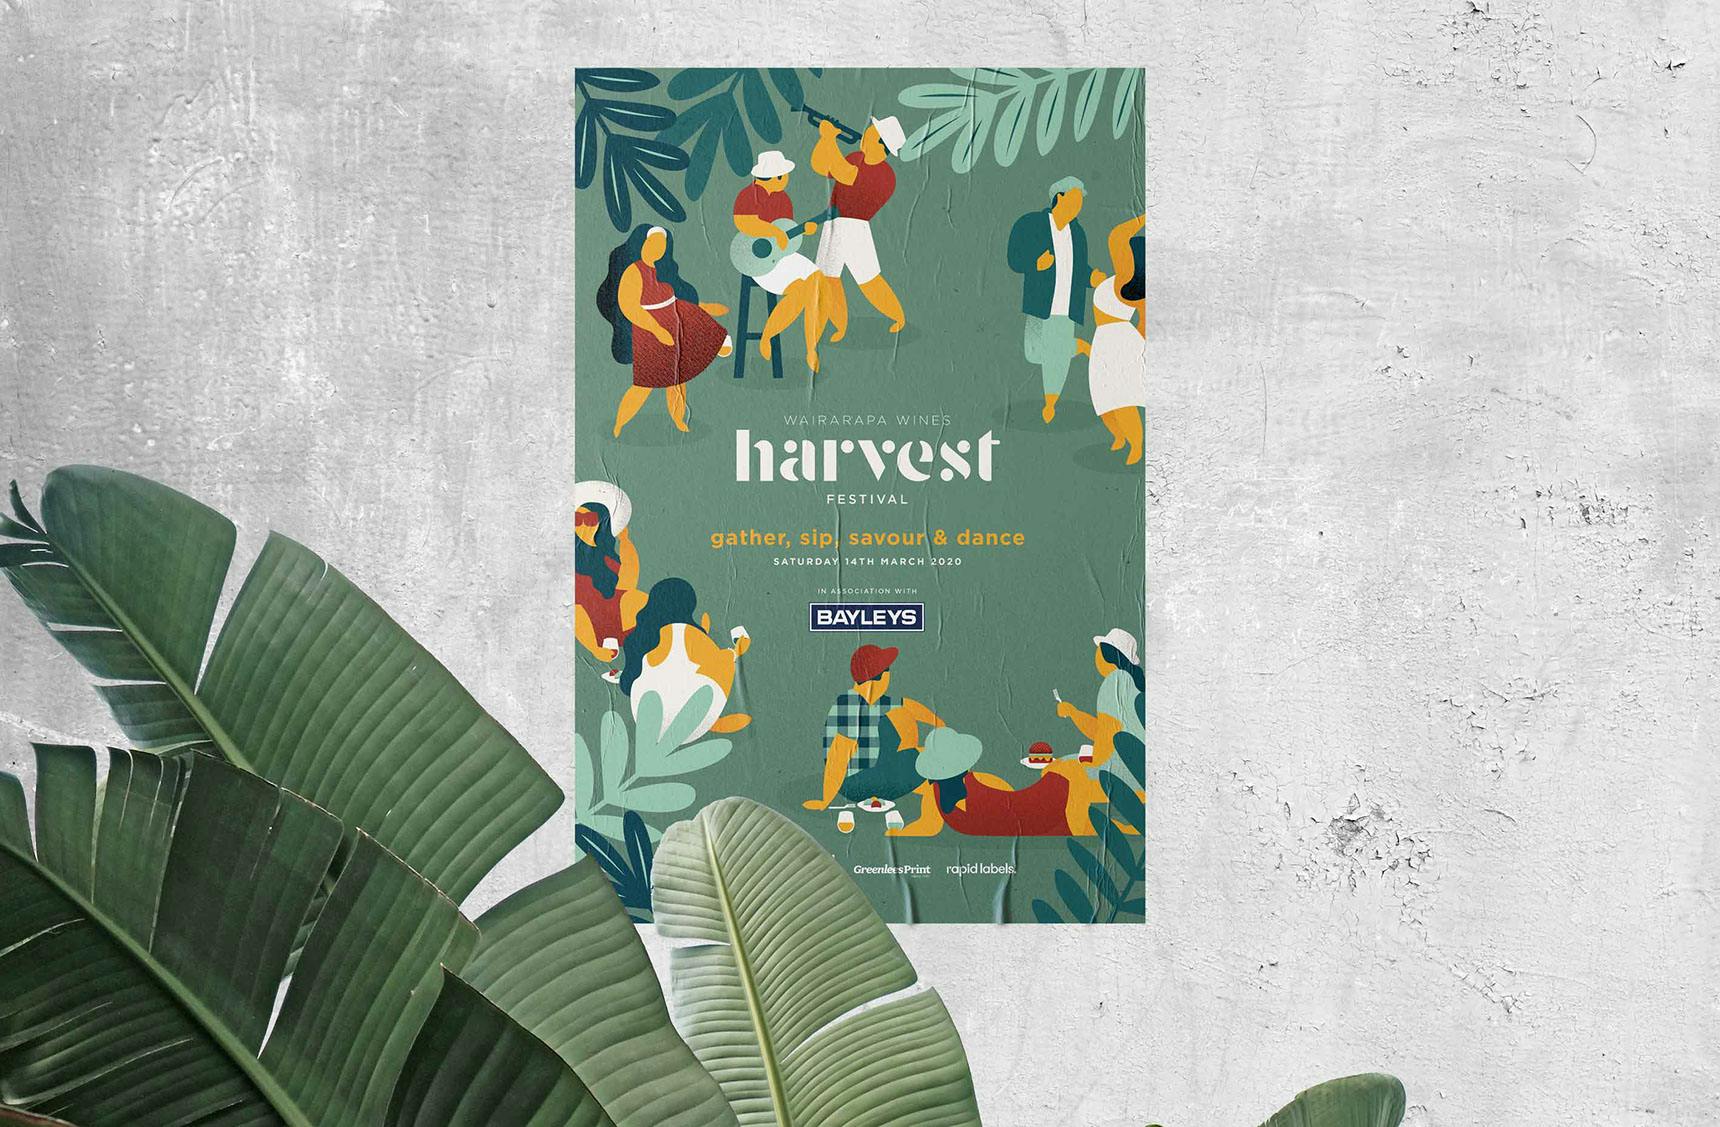 Wairarapa Wines Harvest Festival Poster Design